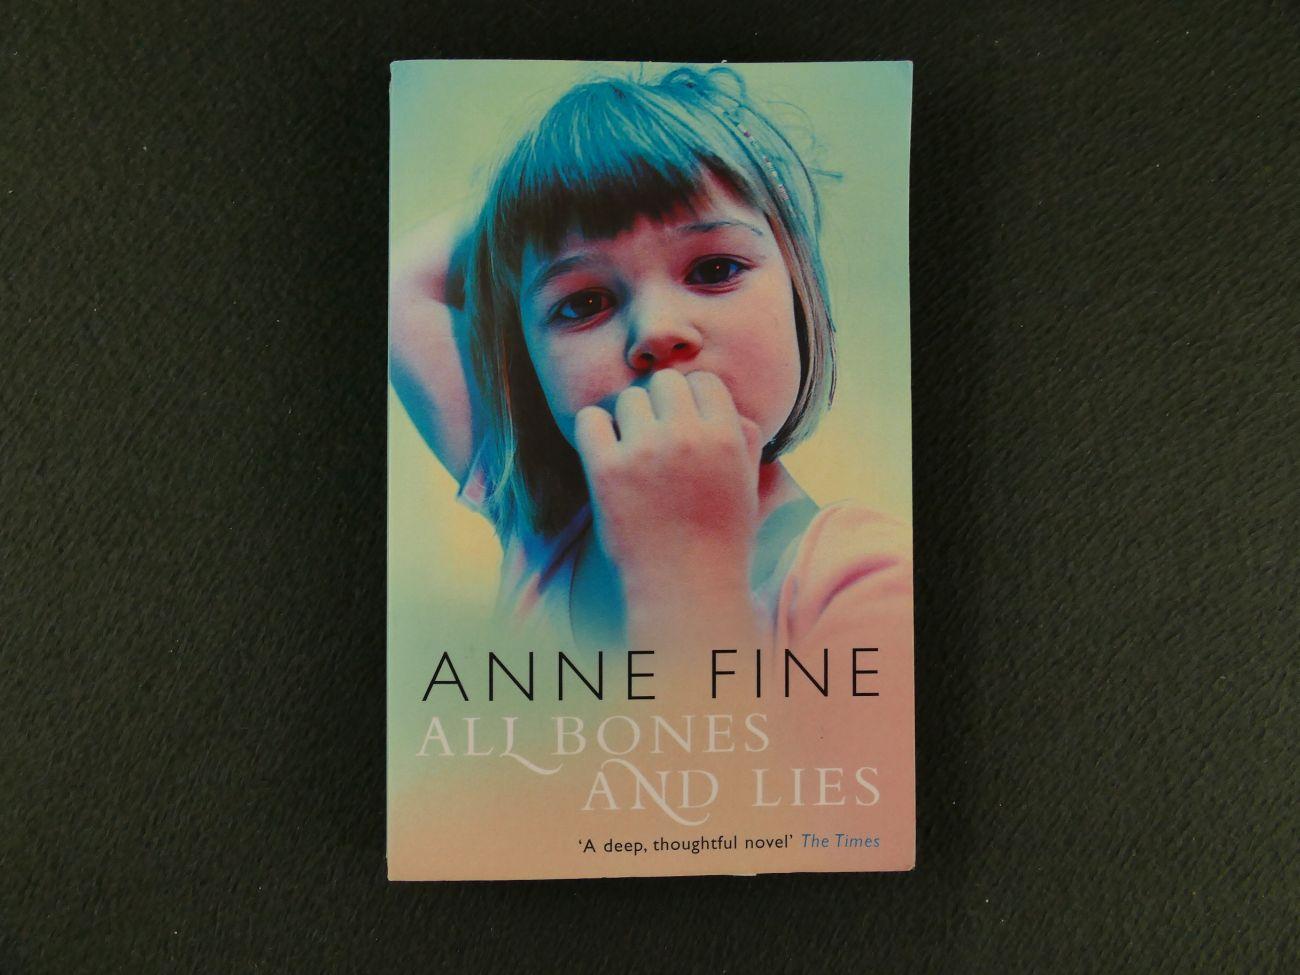 Fine, Anne - All bones and lies